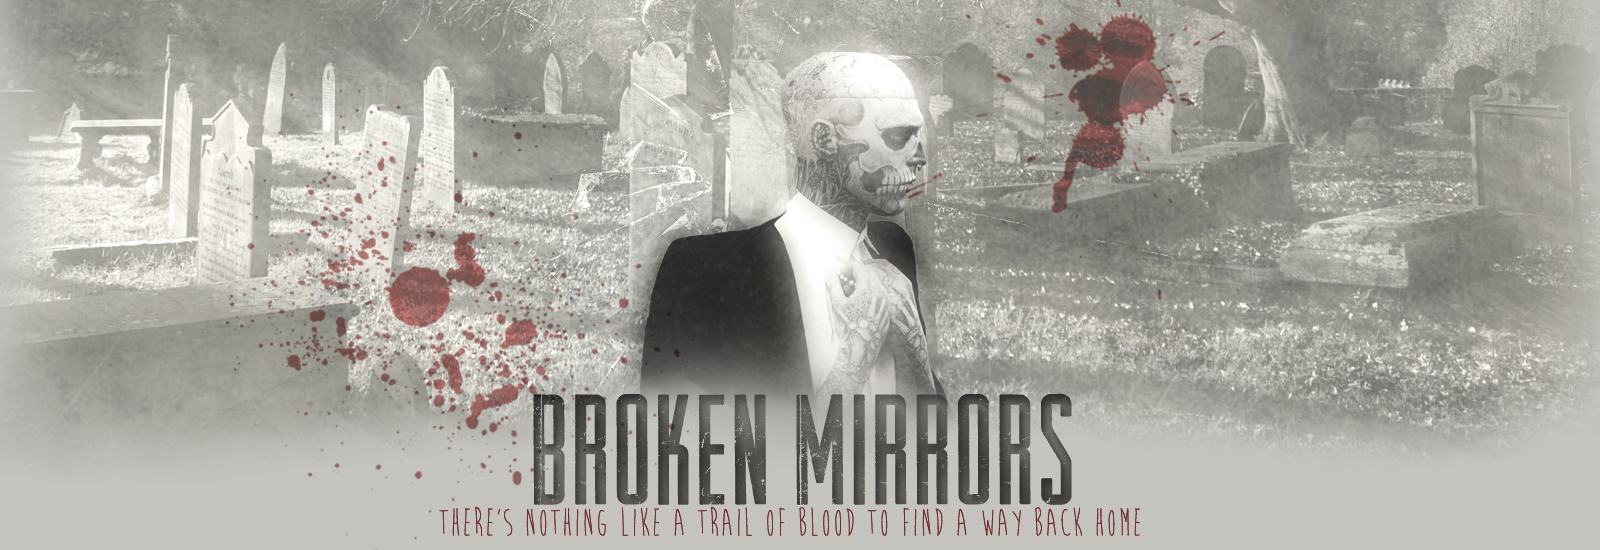 Broken Mirrors 15011708464018526512884151